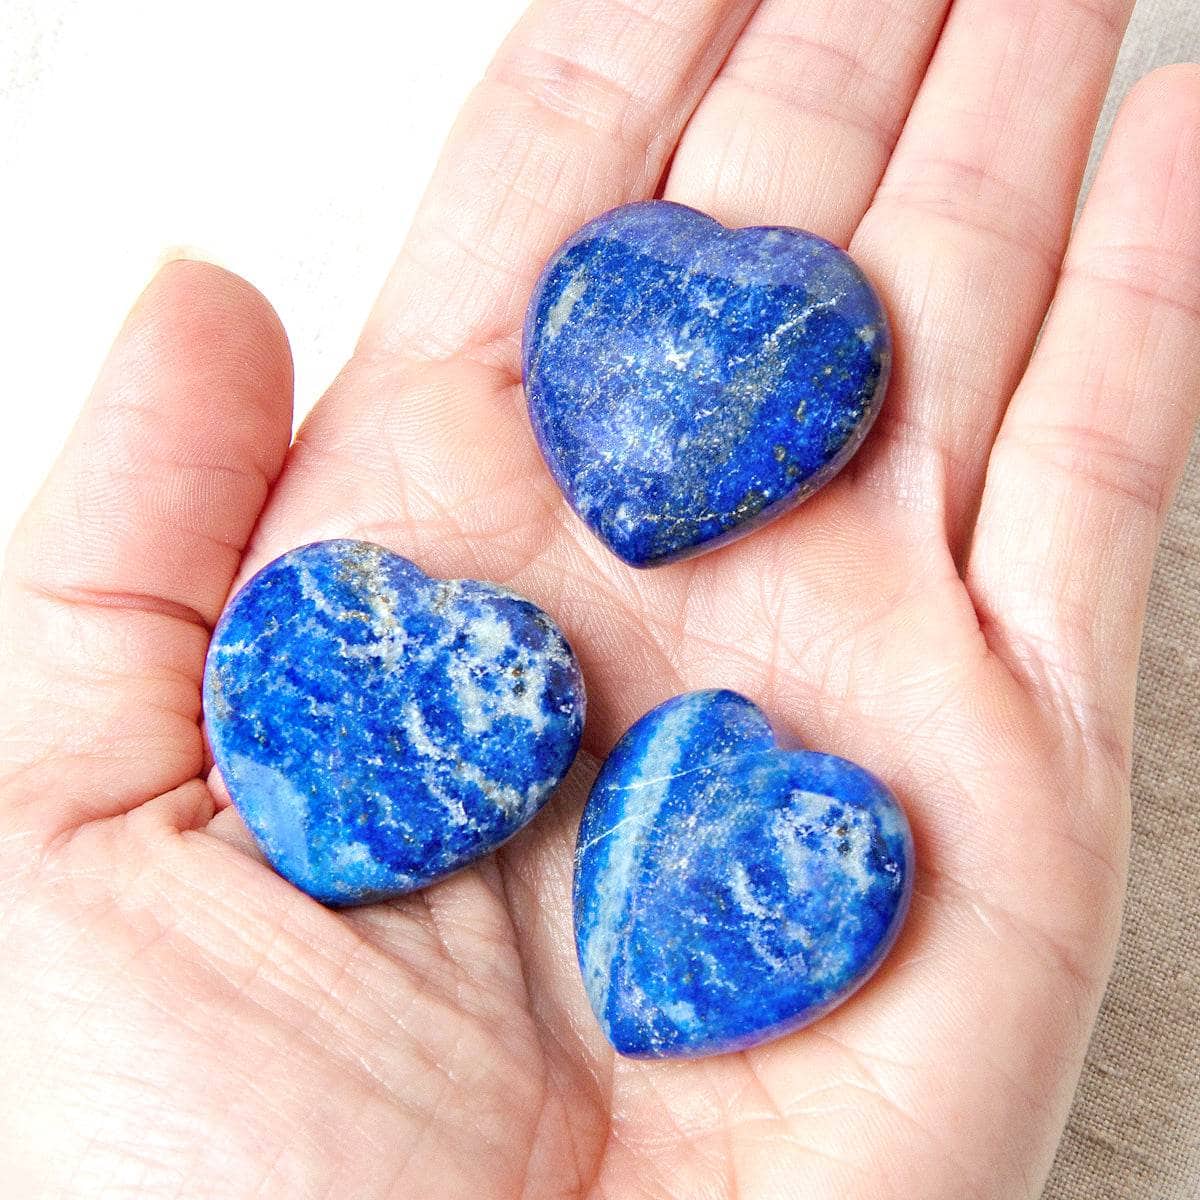 Lapis Lazuli Mini Heart Set by Tiny Rituals